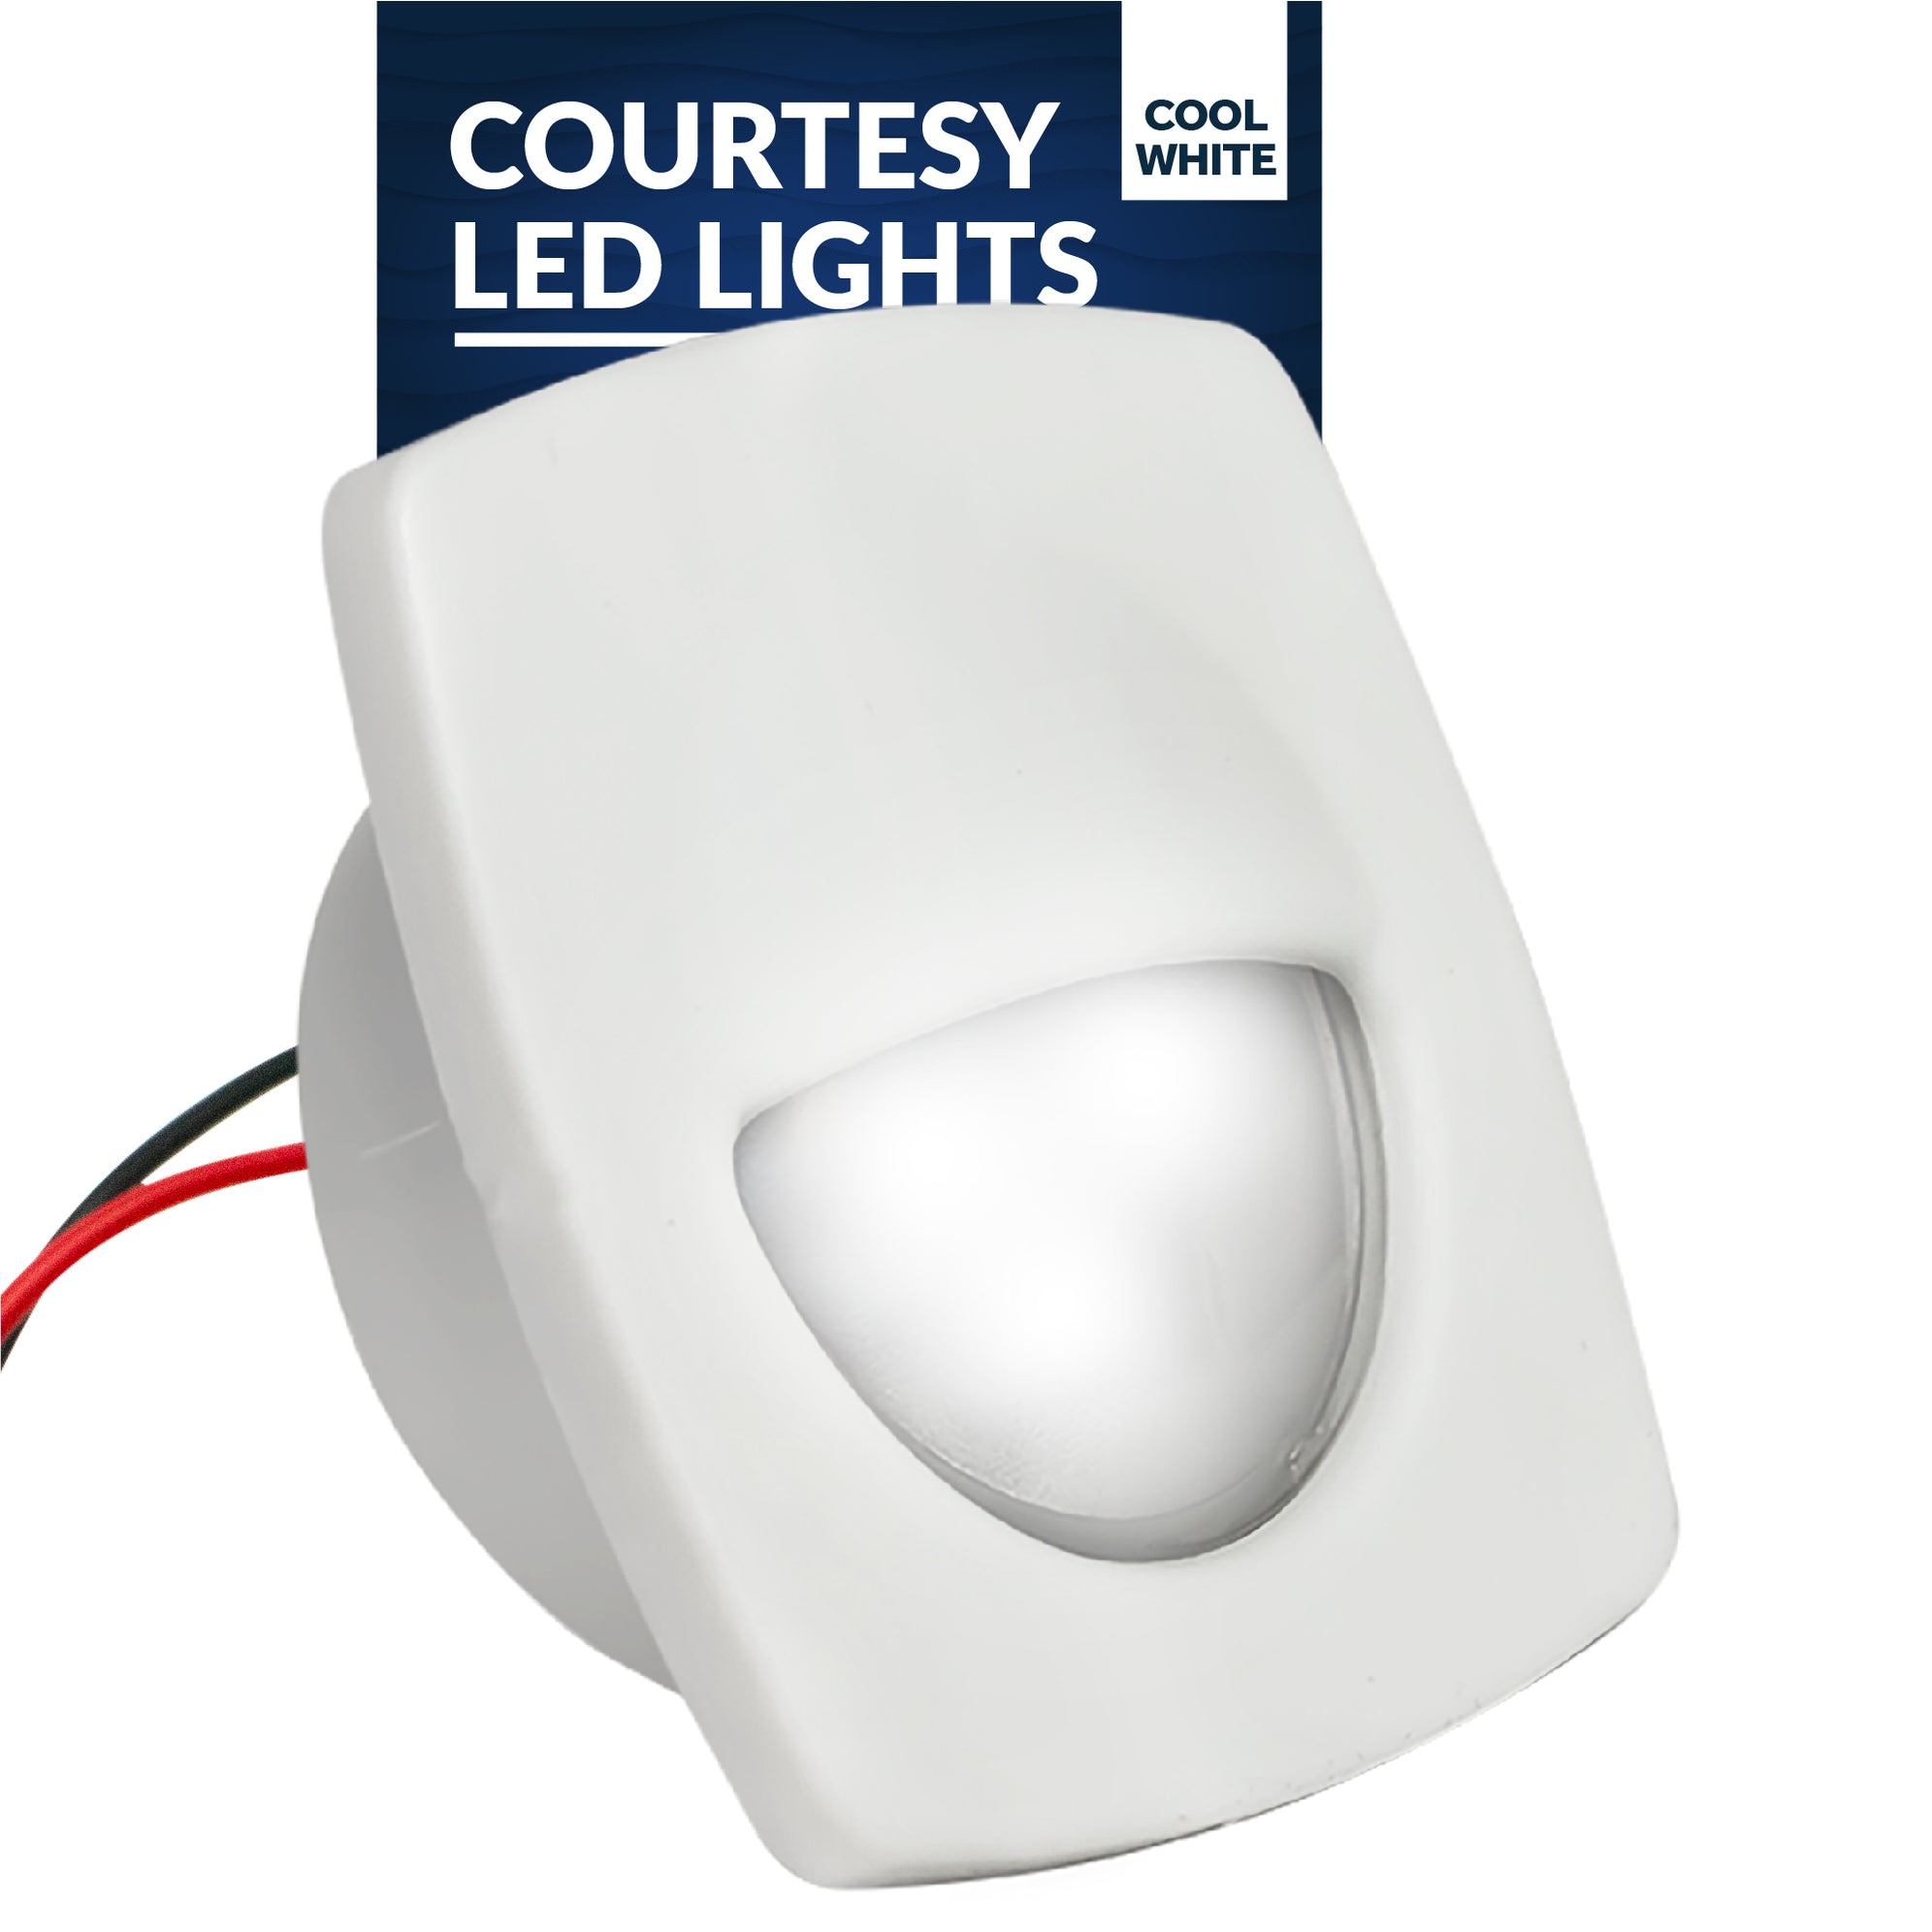 LED Courtesy Companion Way Light, White Square, Cool White - FO2642